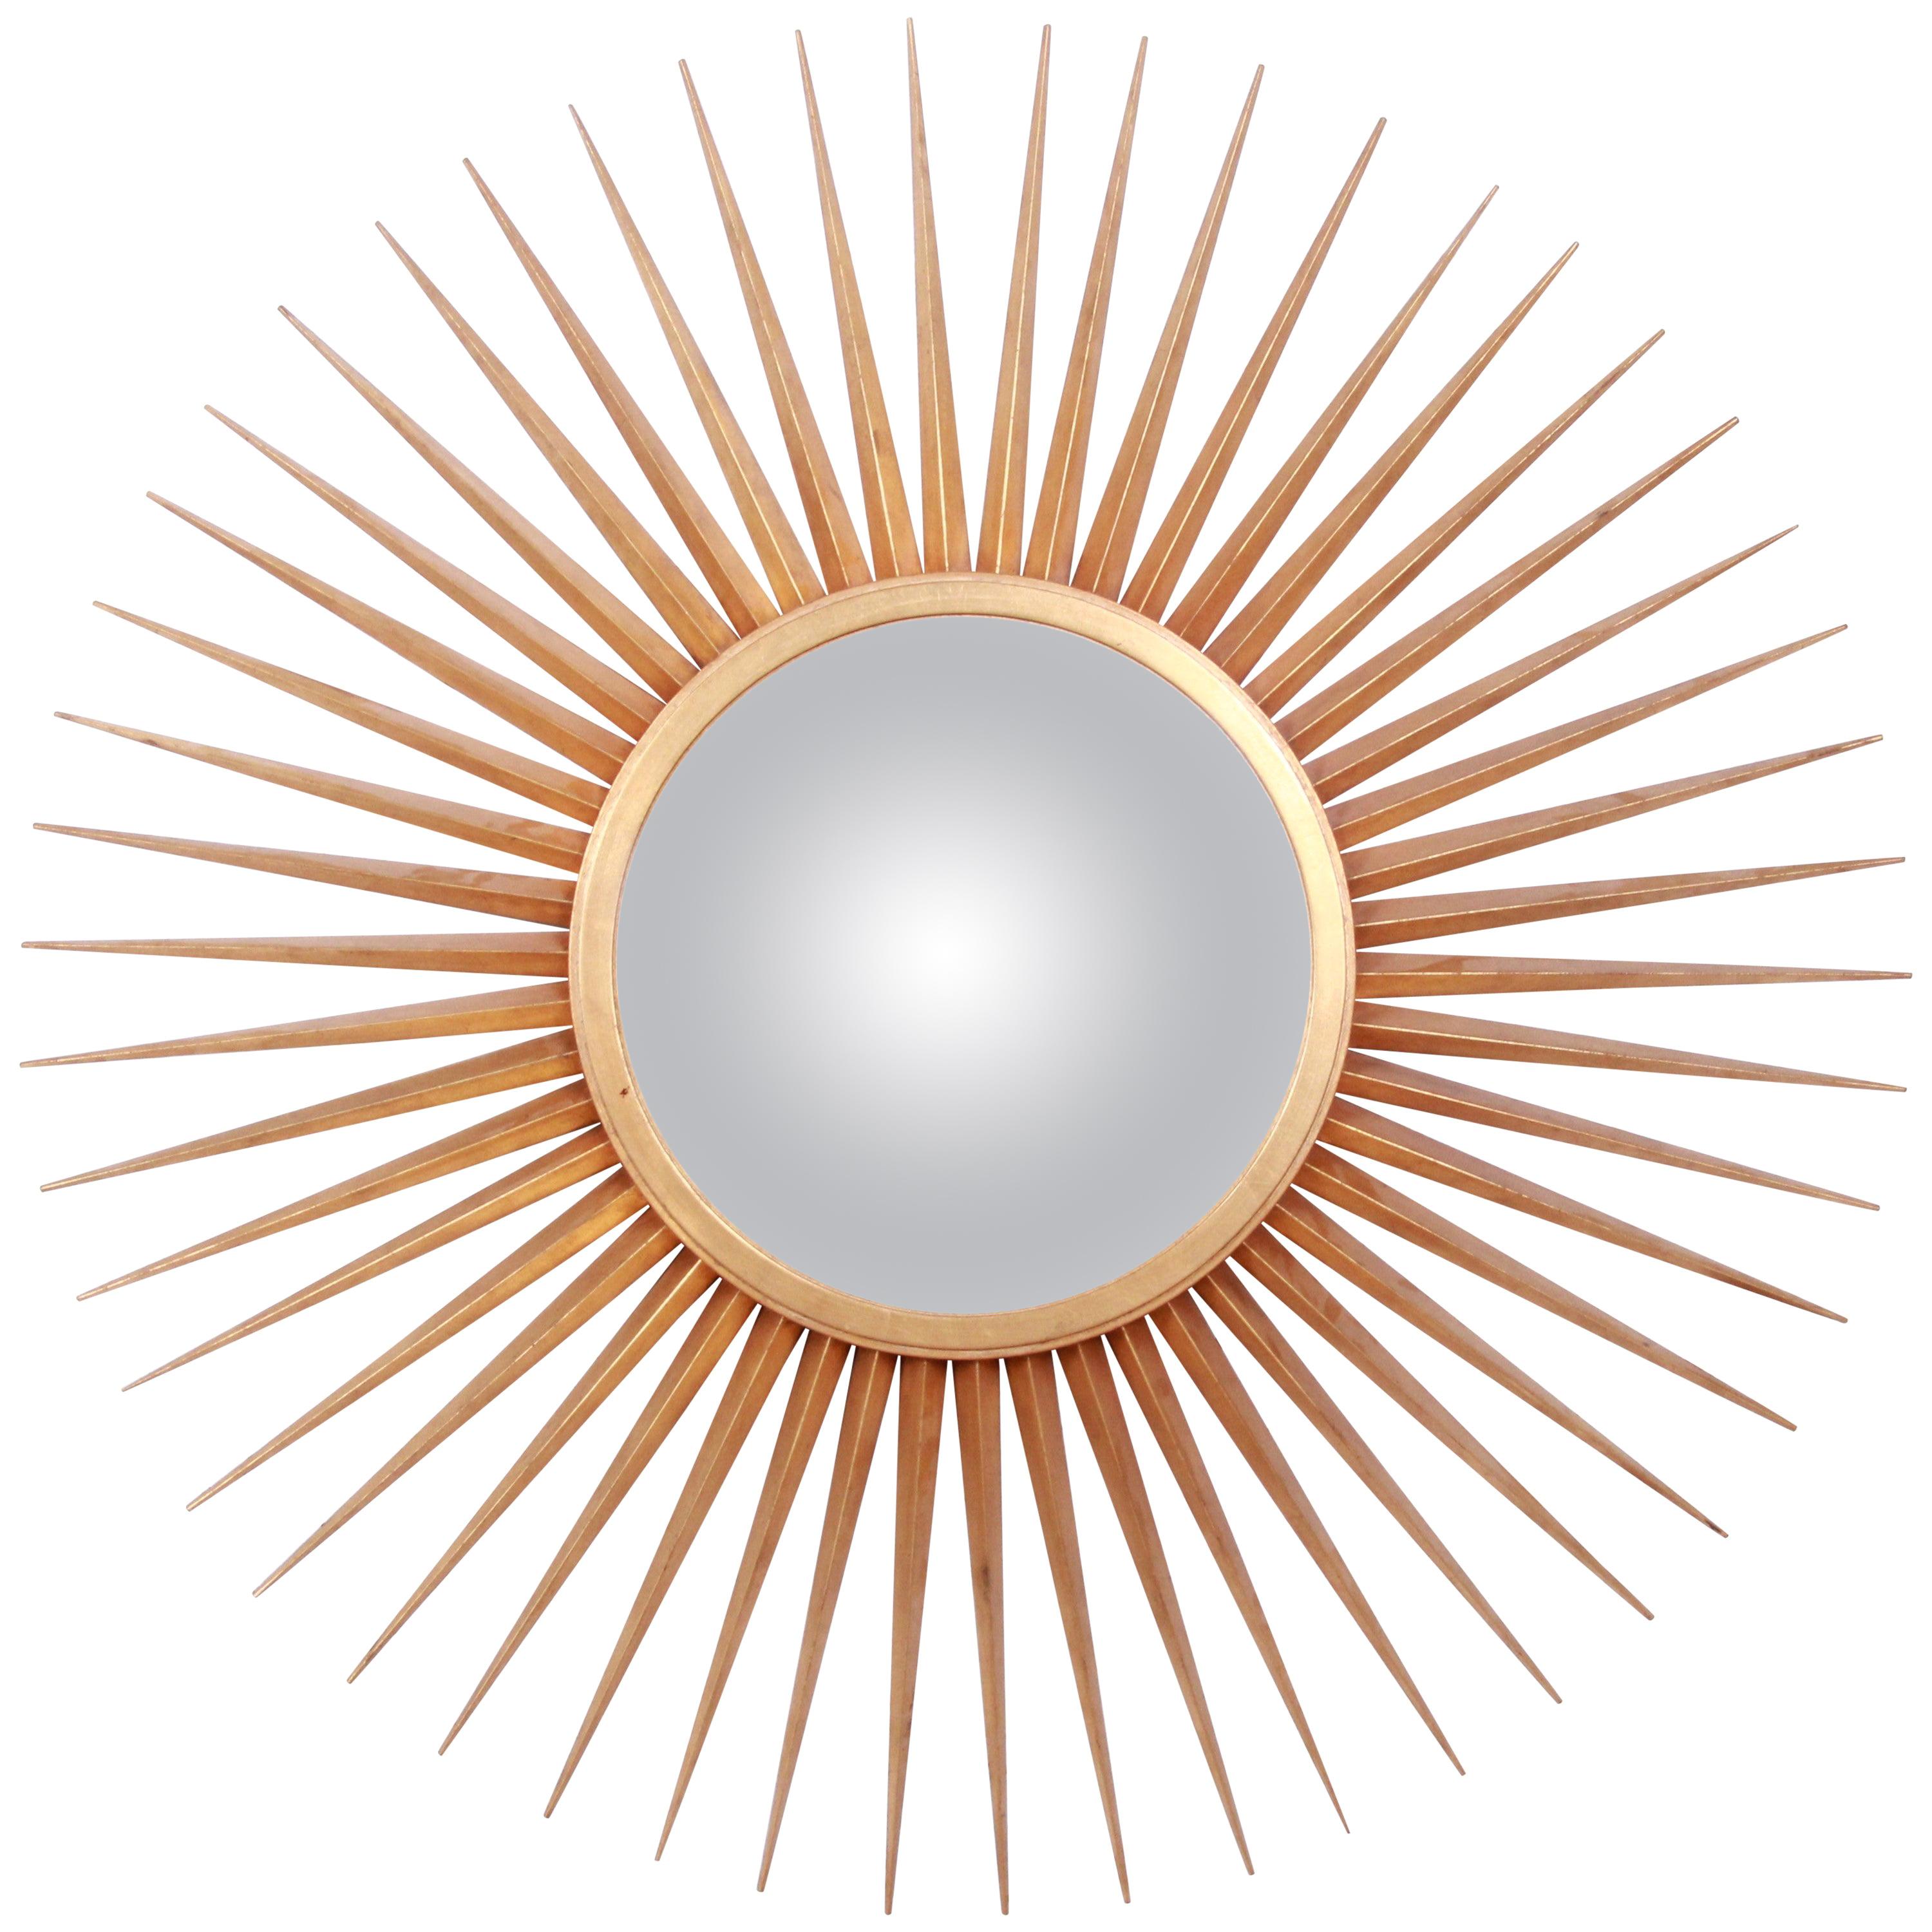 Parish-Hadley for Baker Furniture Gold Gilt Sunburst Convex Mirror